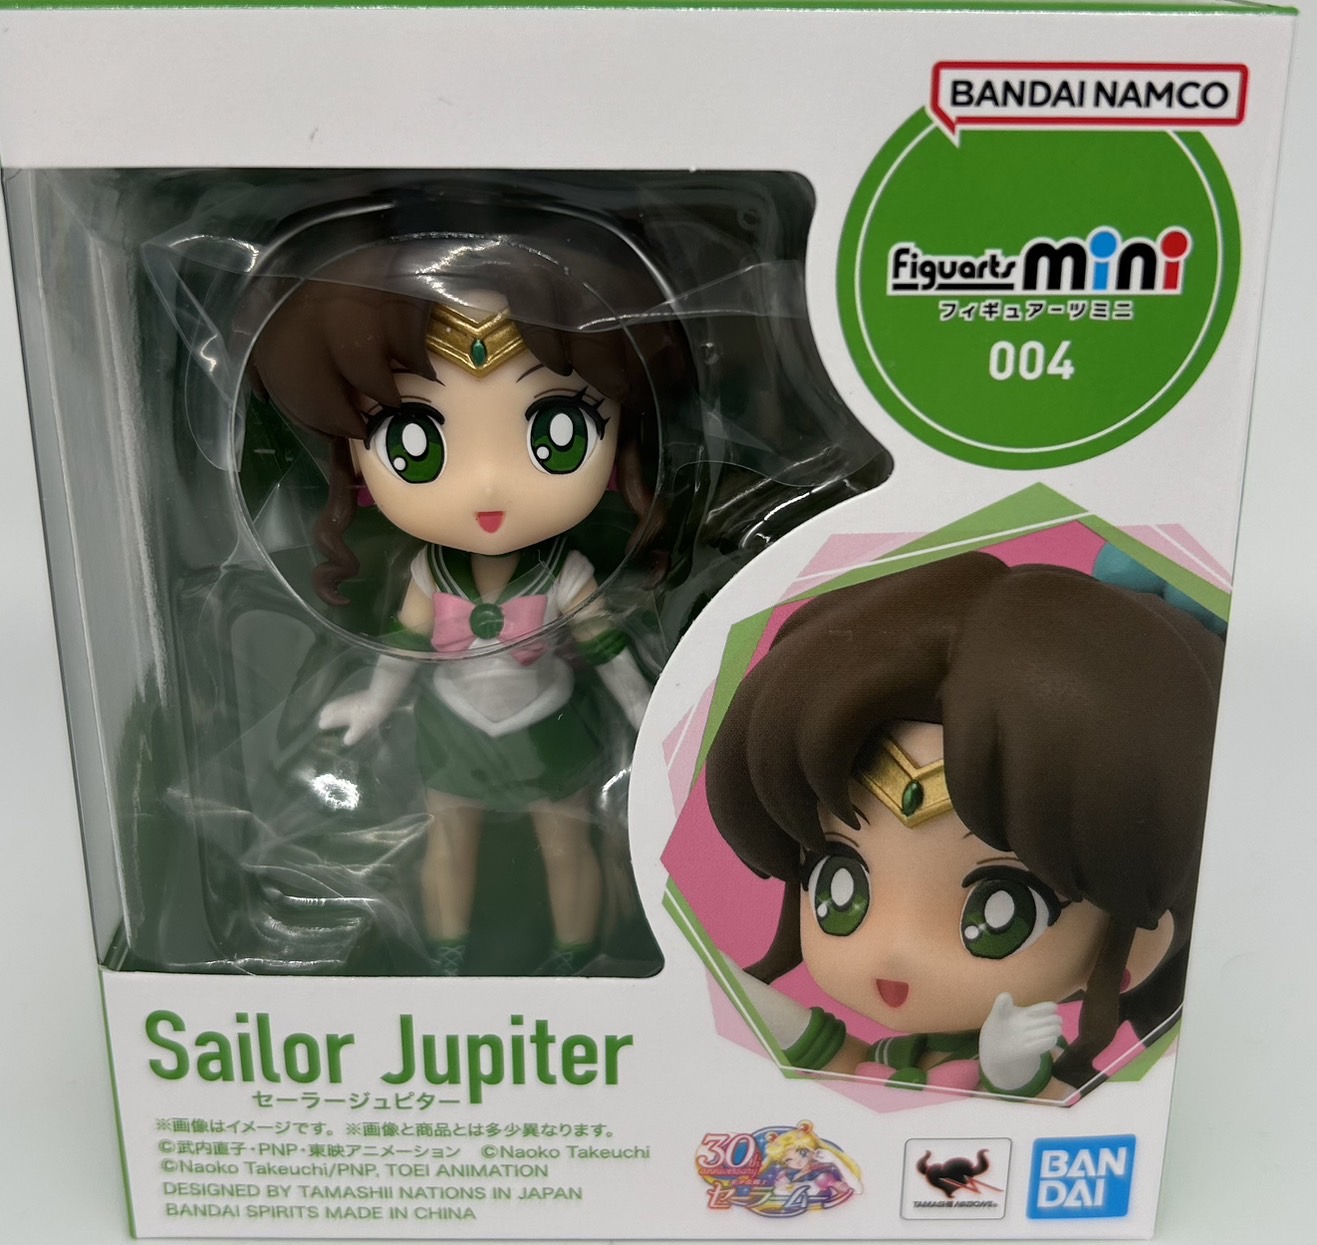 Figuarts mini 004 Sailor Jupiter